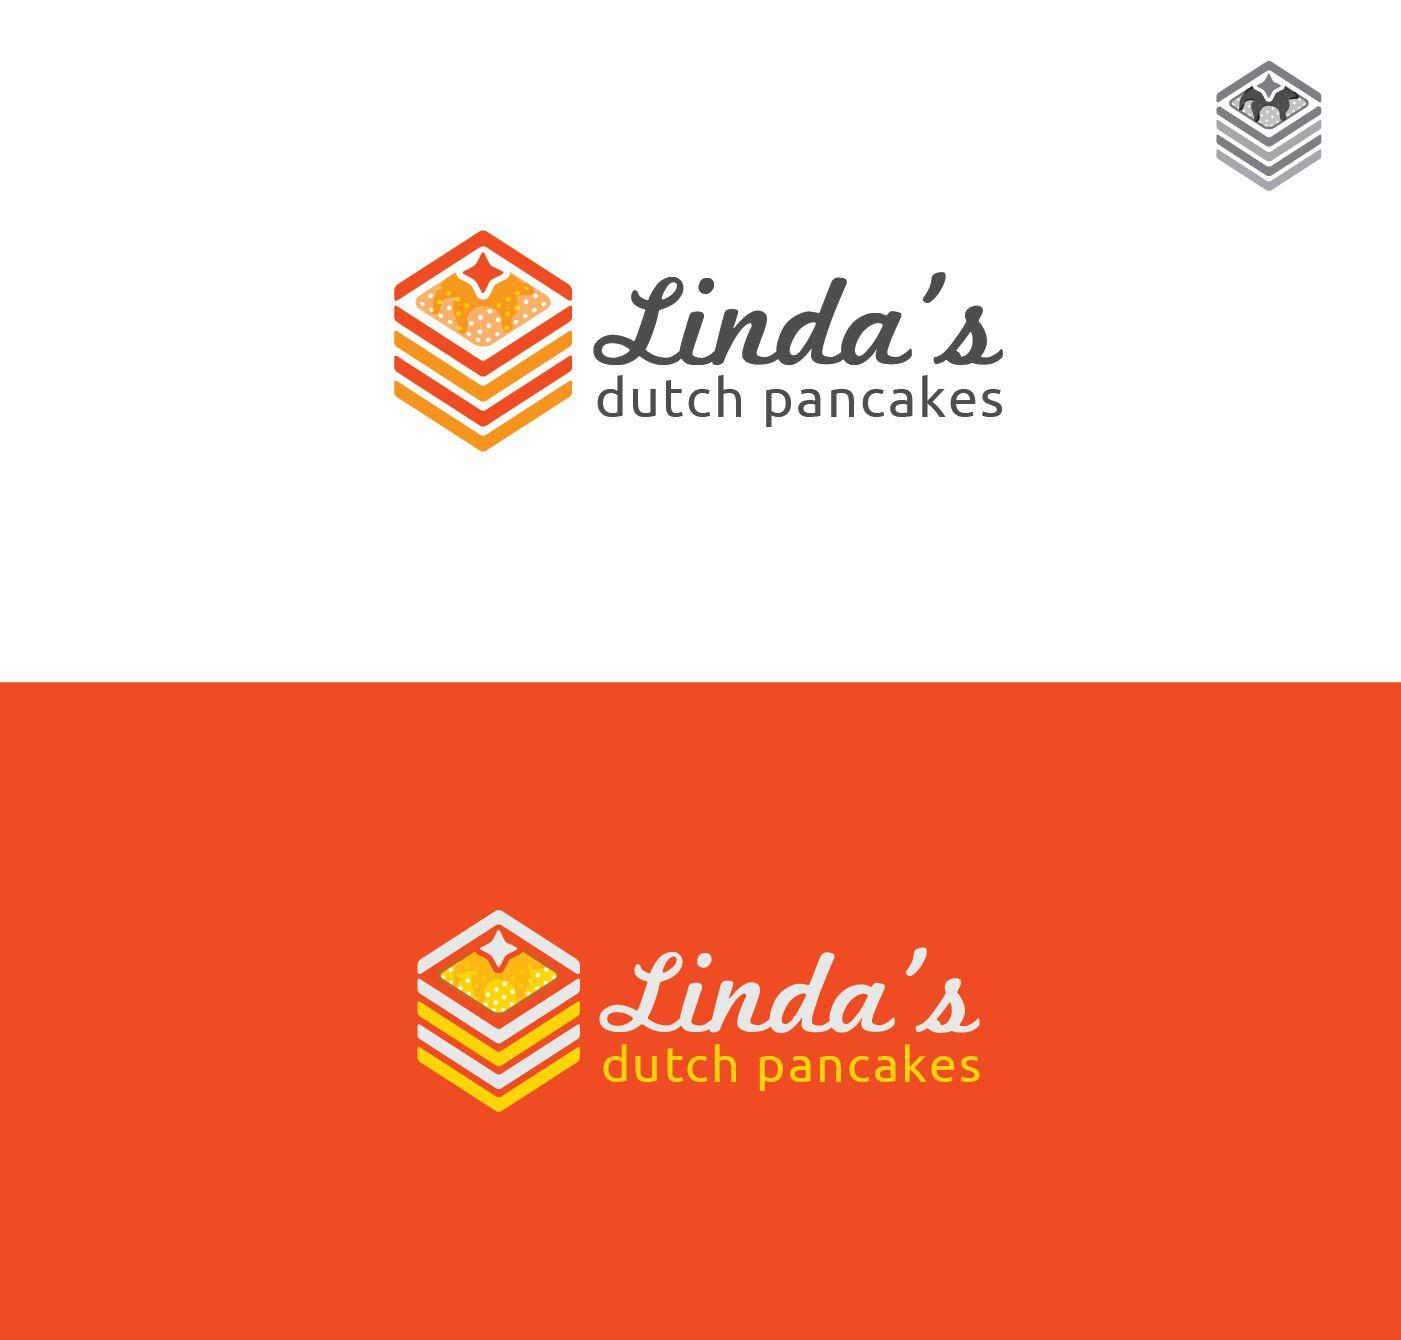 Red and Orange Restaurant Logo - Playful, Personable, Restaurant Logo Design for Linda's Dutch